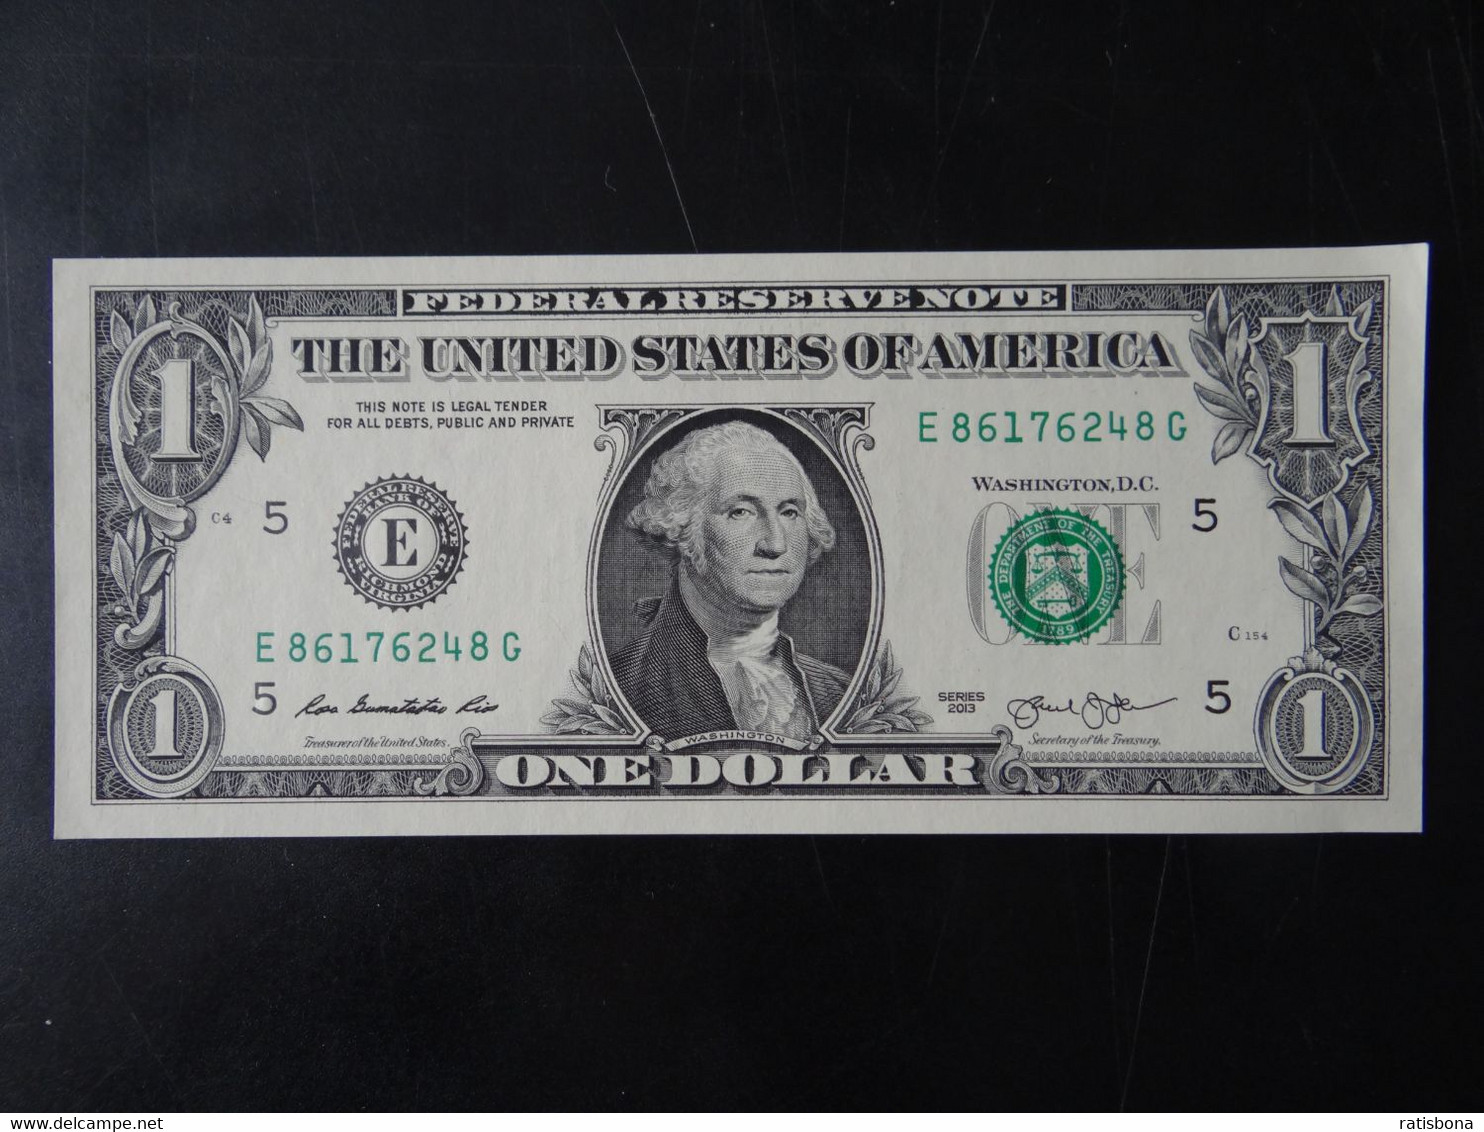 Original 1 Dollar Banknote - USA 2013, Serie E, Selten, Unc/kassenfrisch - Billetes De La Reserva Federal (1928-...)